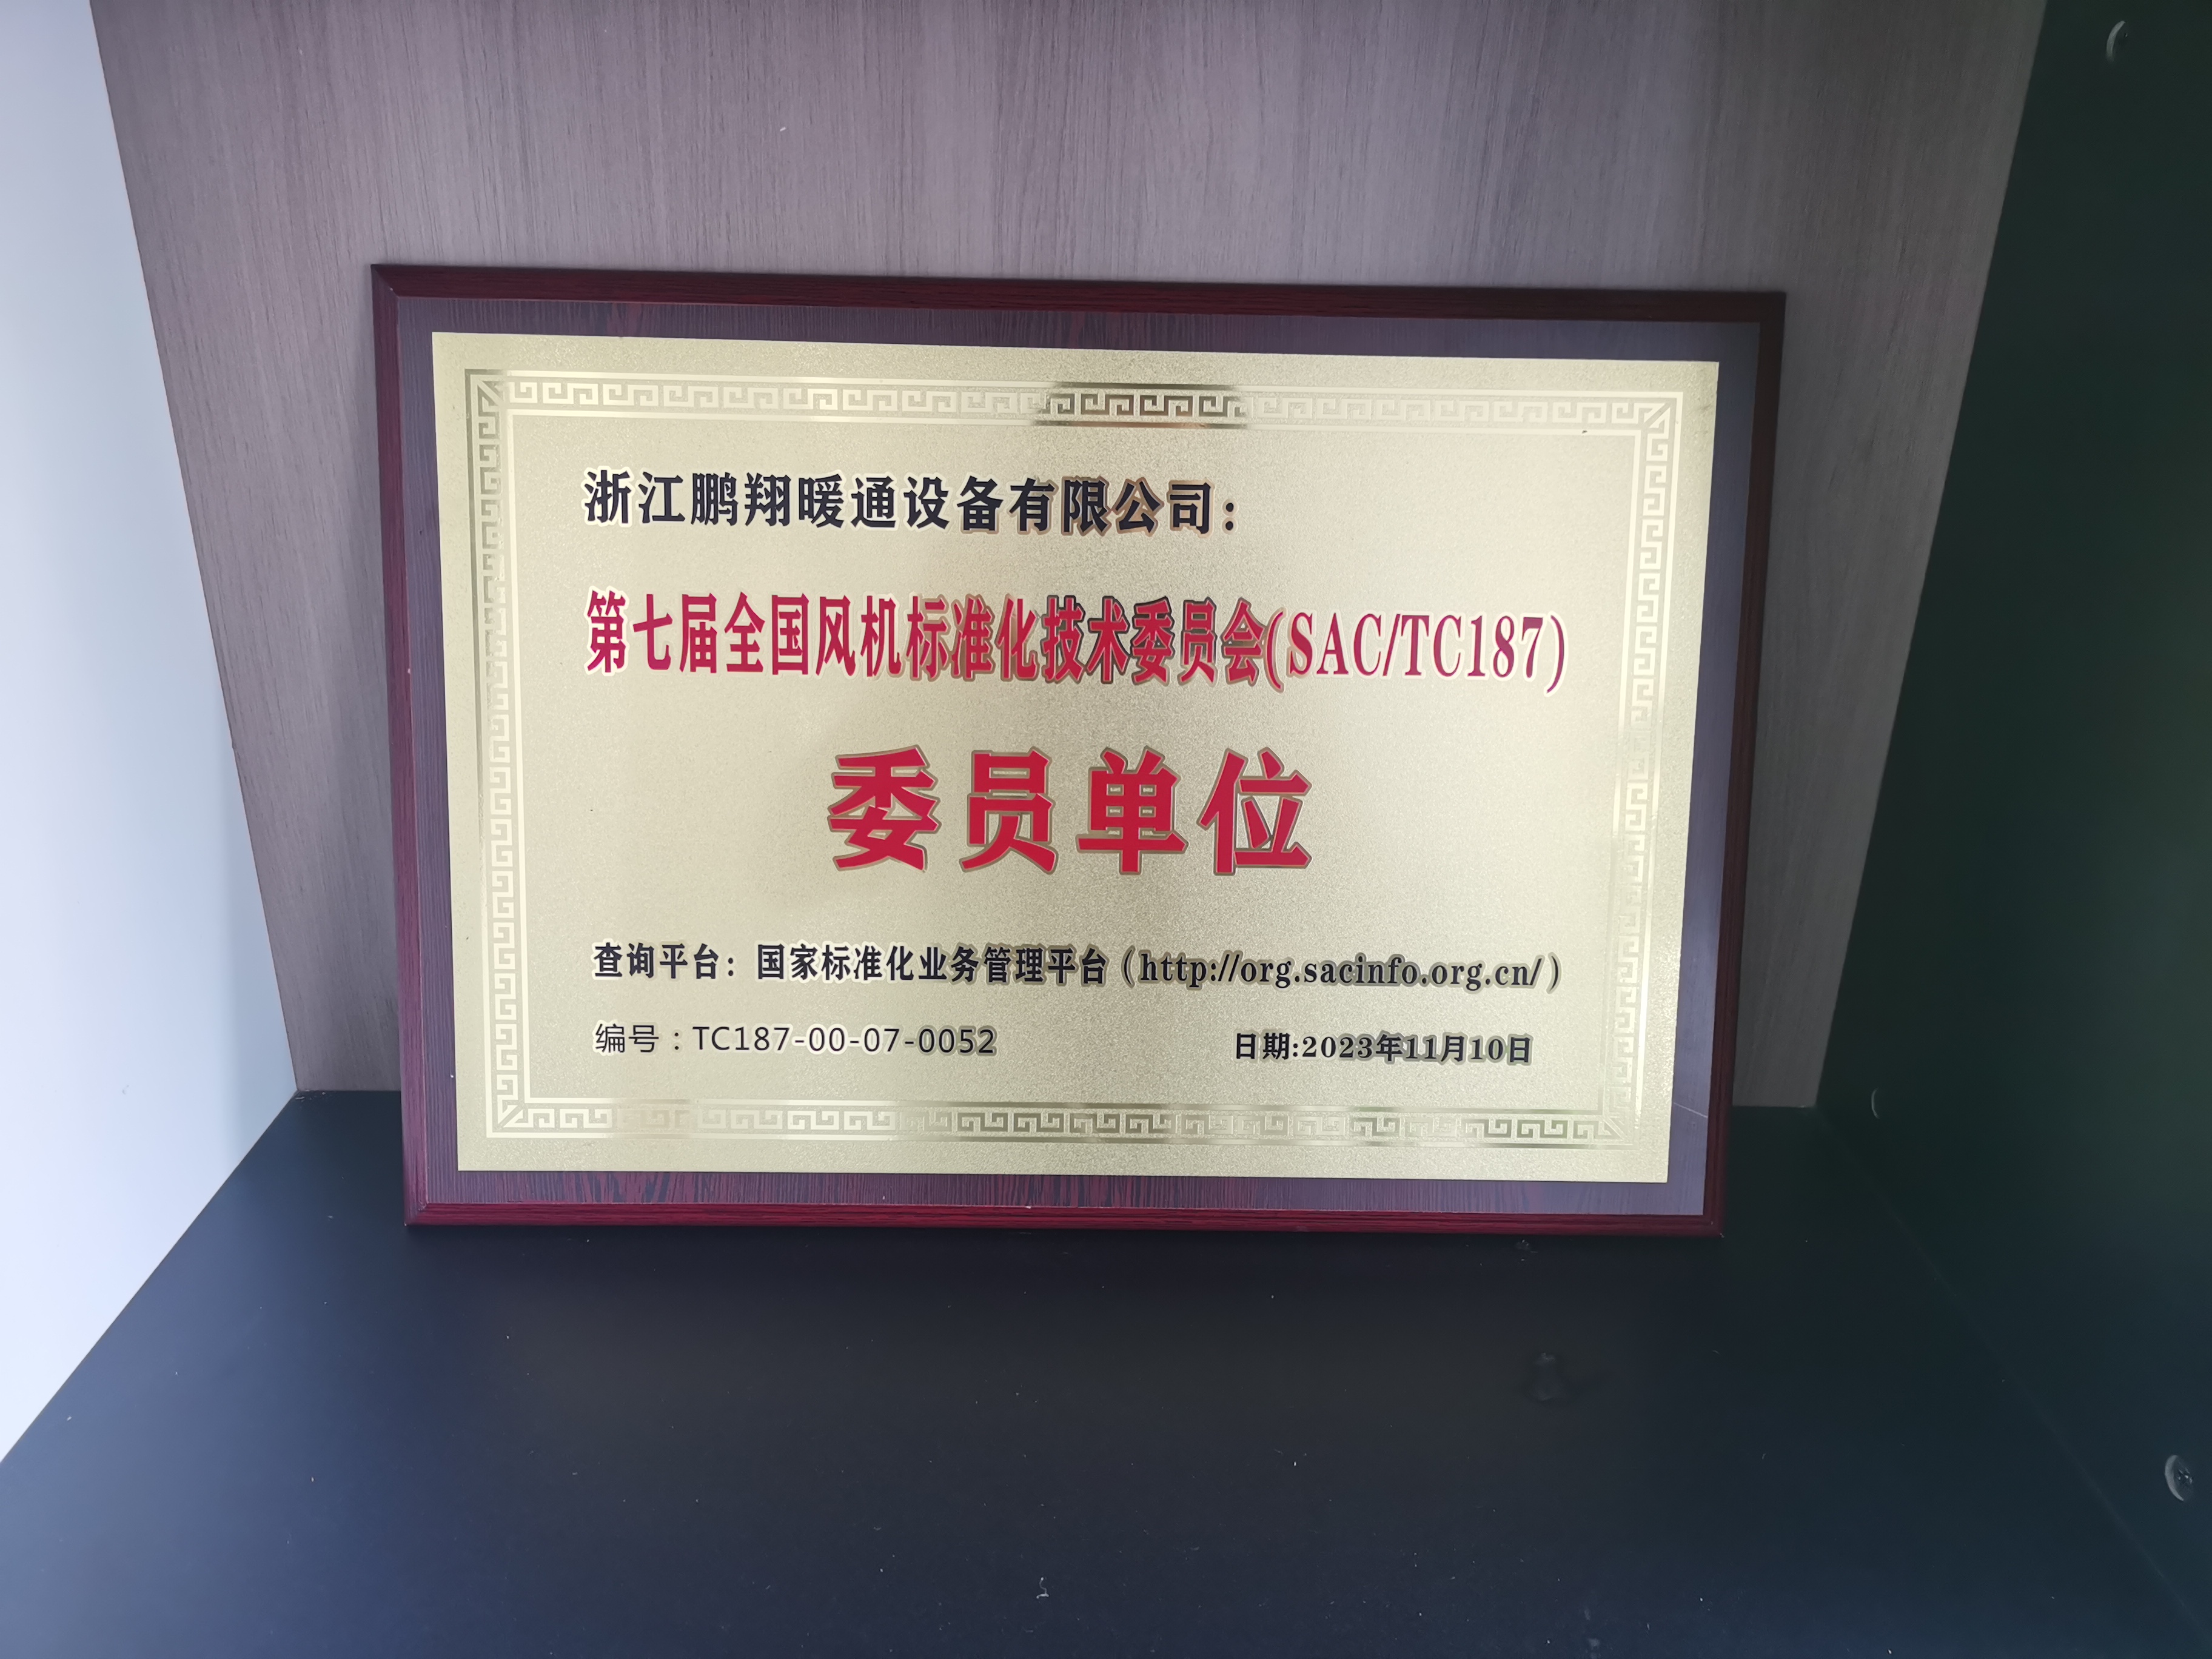 VALMET پيپر مشينري ٽيڪنالاجي ٽيم سالياني آڊٽ انسپيڪشن دوران Zhejiang Pengxiang HVAC Equipment Co., Ltd کي اعليٰ ترين ريٽنگ ڏئي ٿي.